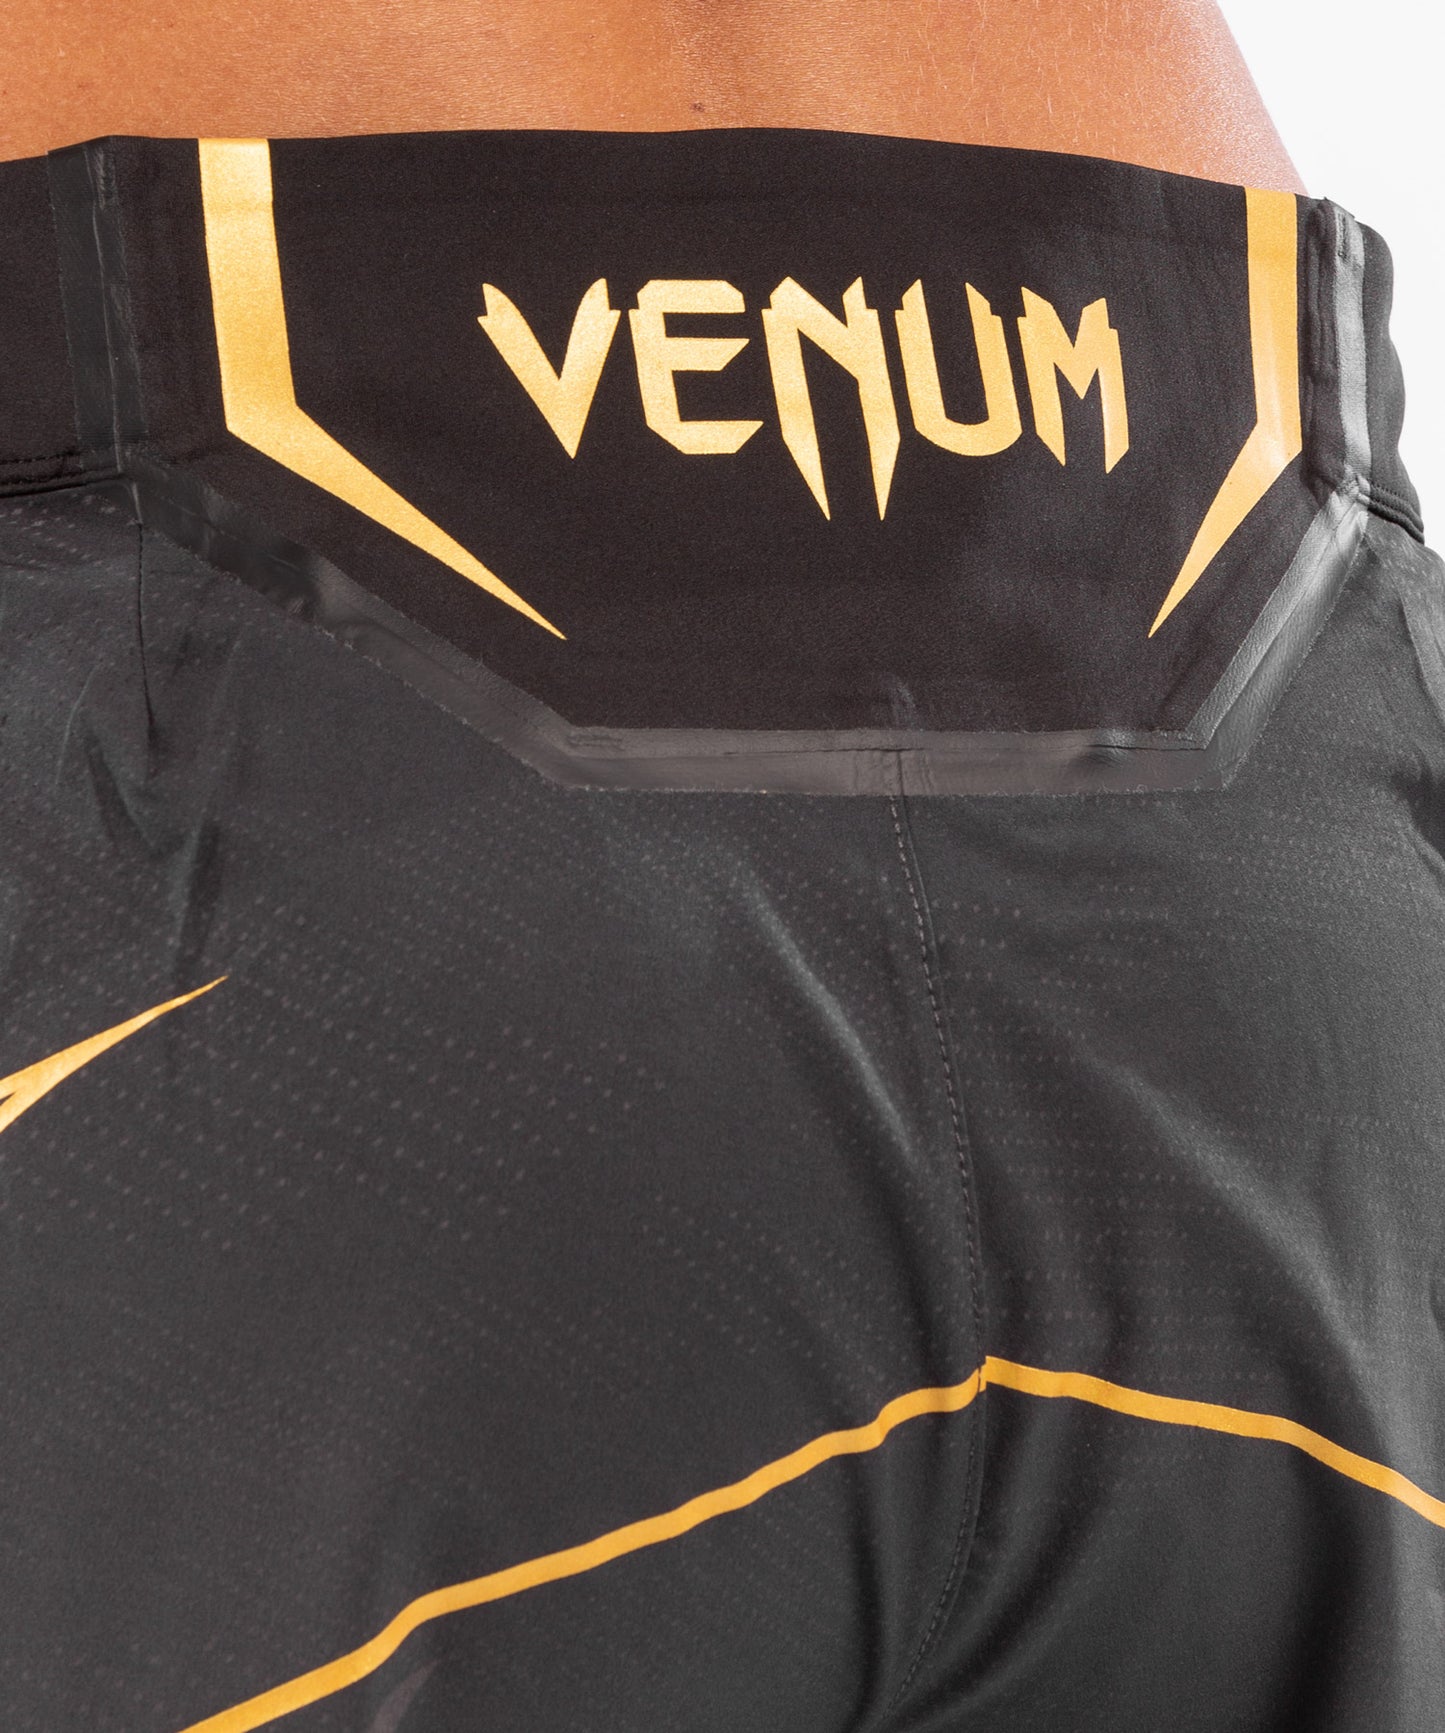 UFC Venum Authentic Fight Night Women's Shorts - Short Fit - Champion